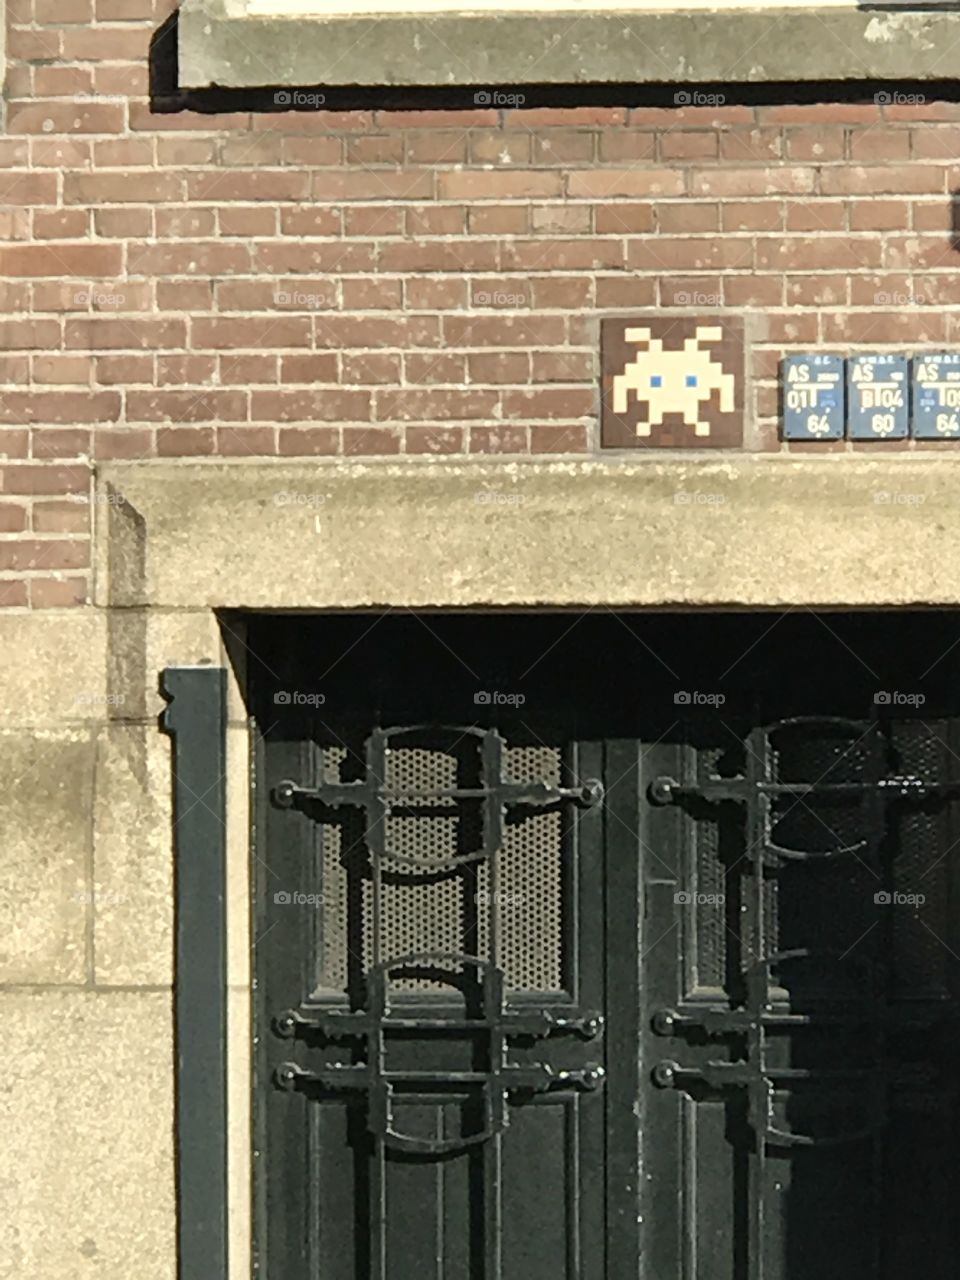 Space invaders 
Door
Outside 
Rotterdam 
Brick
